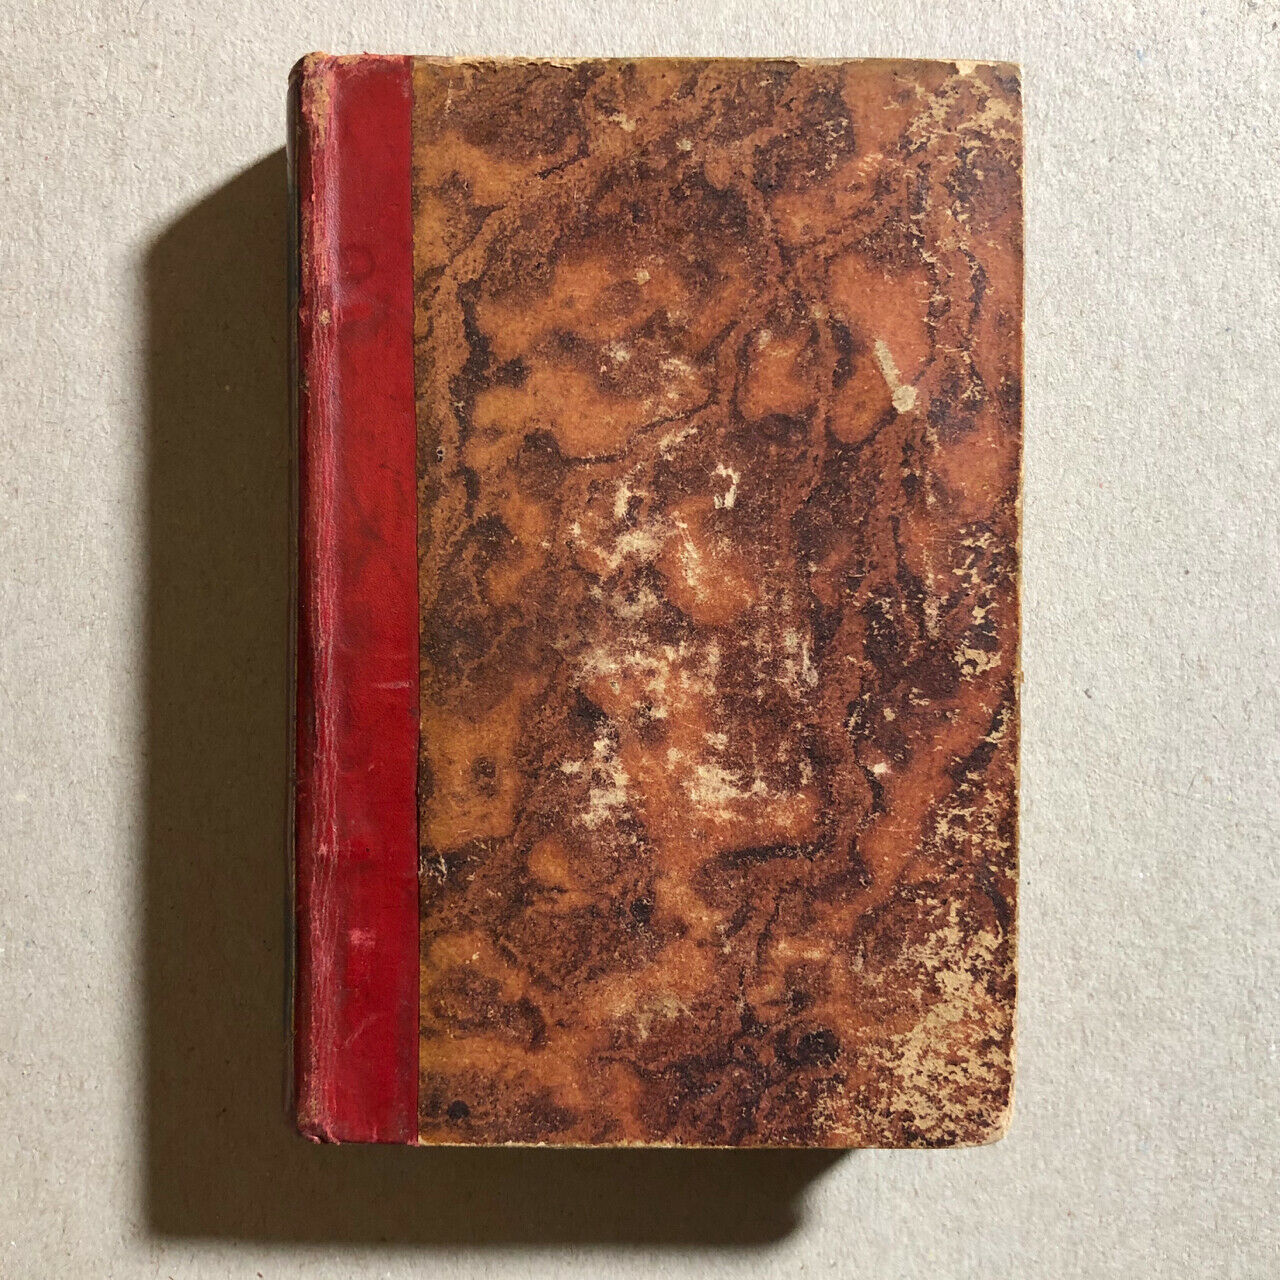 [Antoine, Anthony] Hamilton — Tales — 2 small volumes — Dauthereau — 1828.